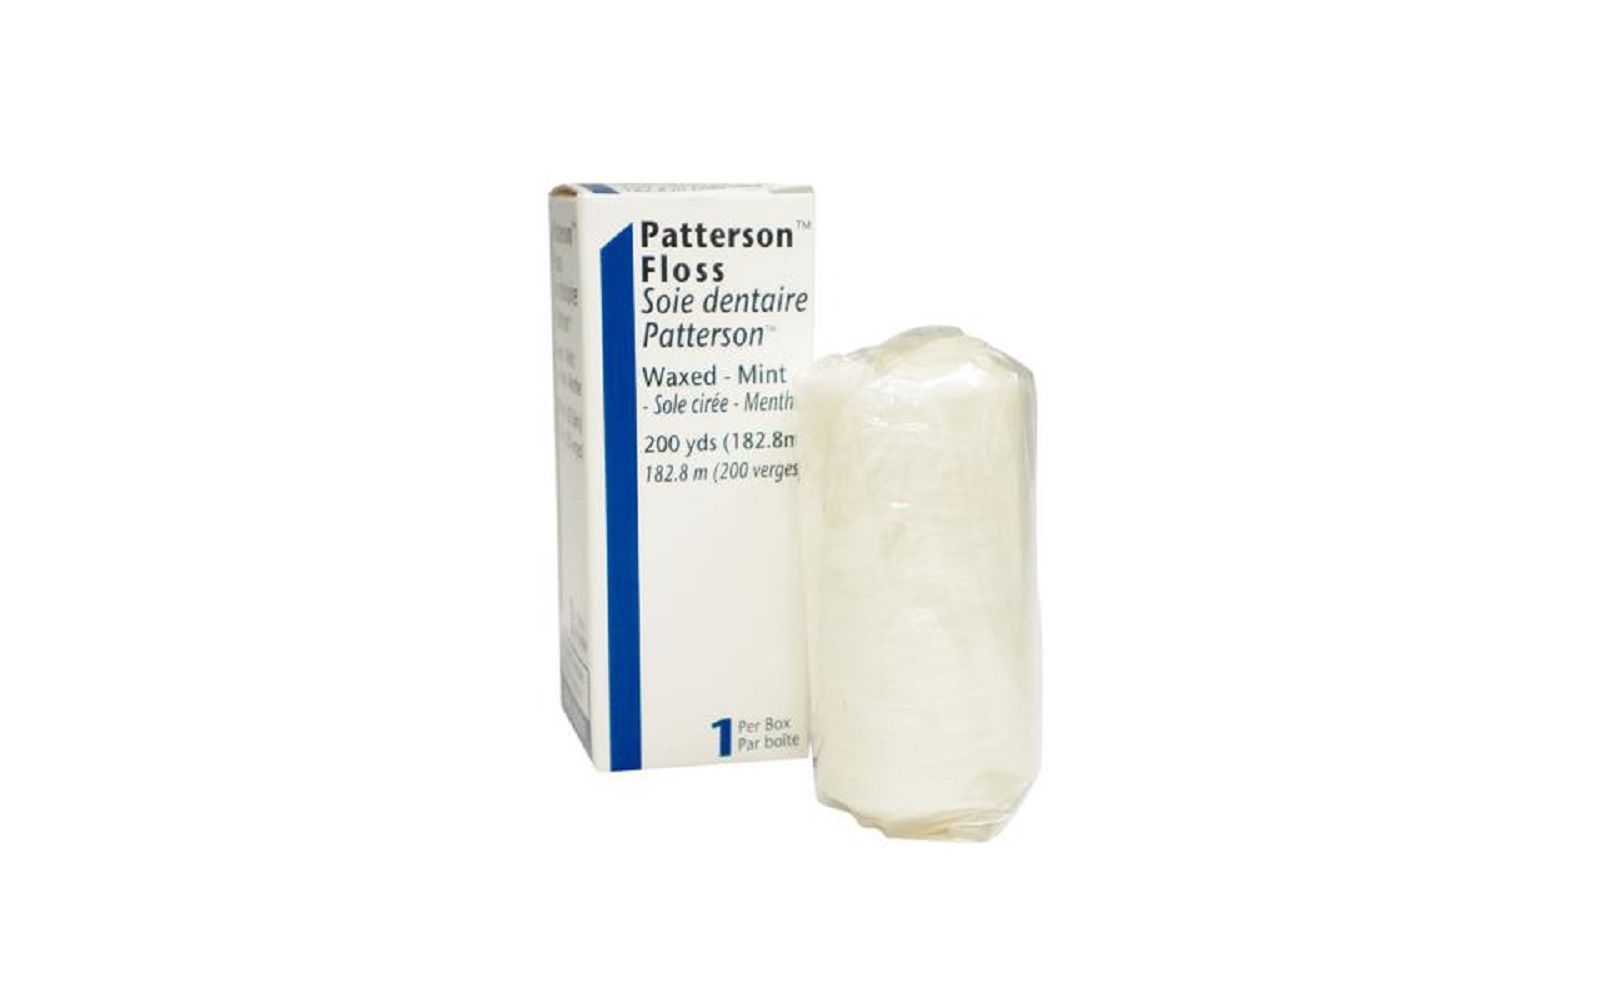 Patterson® floss, 200 yd refill spool